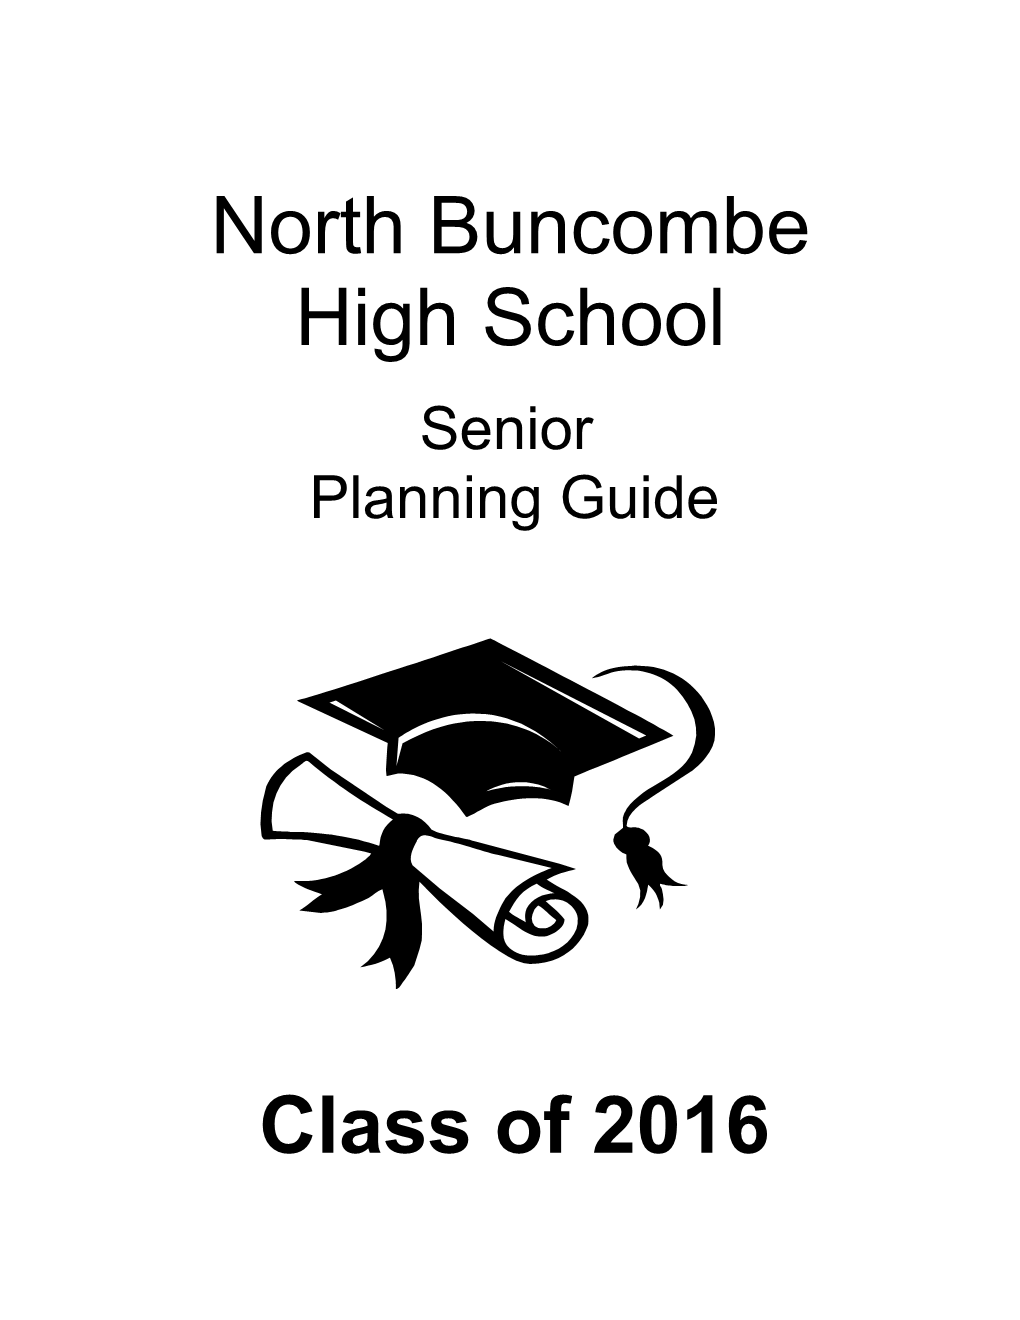 North Buncombe High School